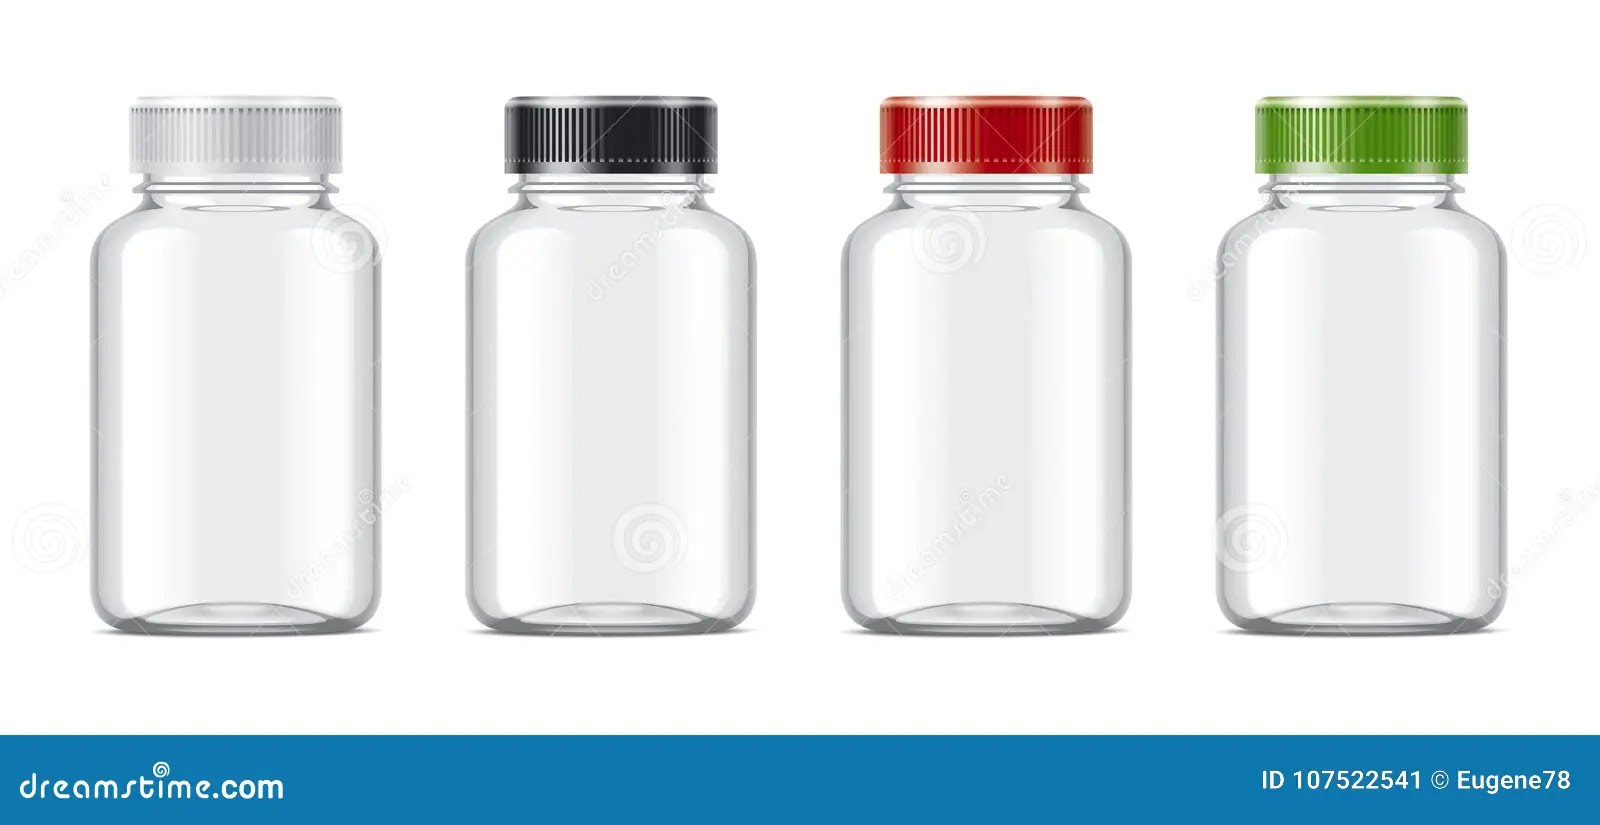 Blank Bottles Mockups for Pills or Other Pharmaceutical Preparations